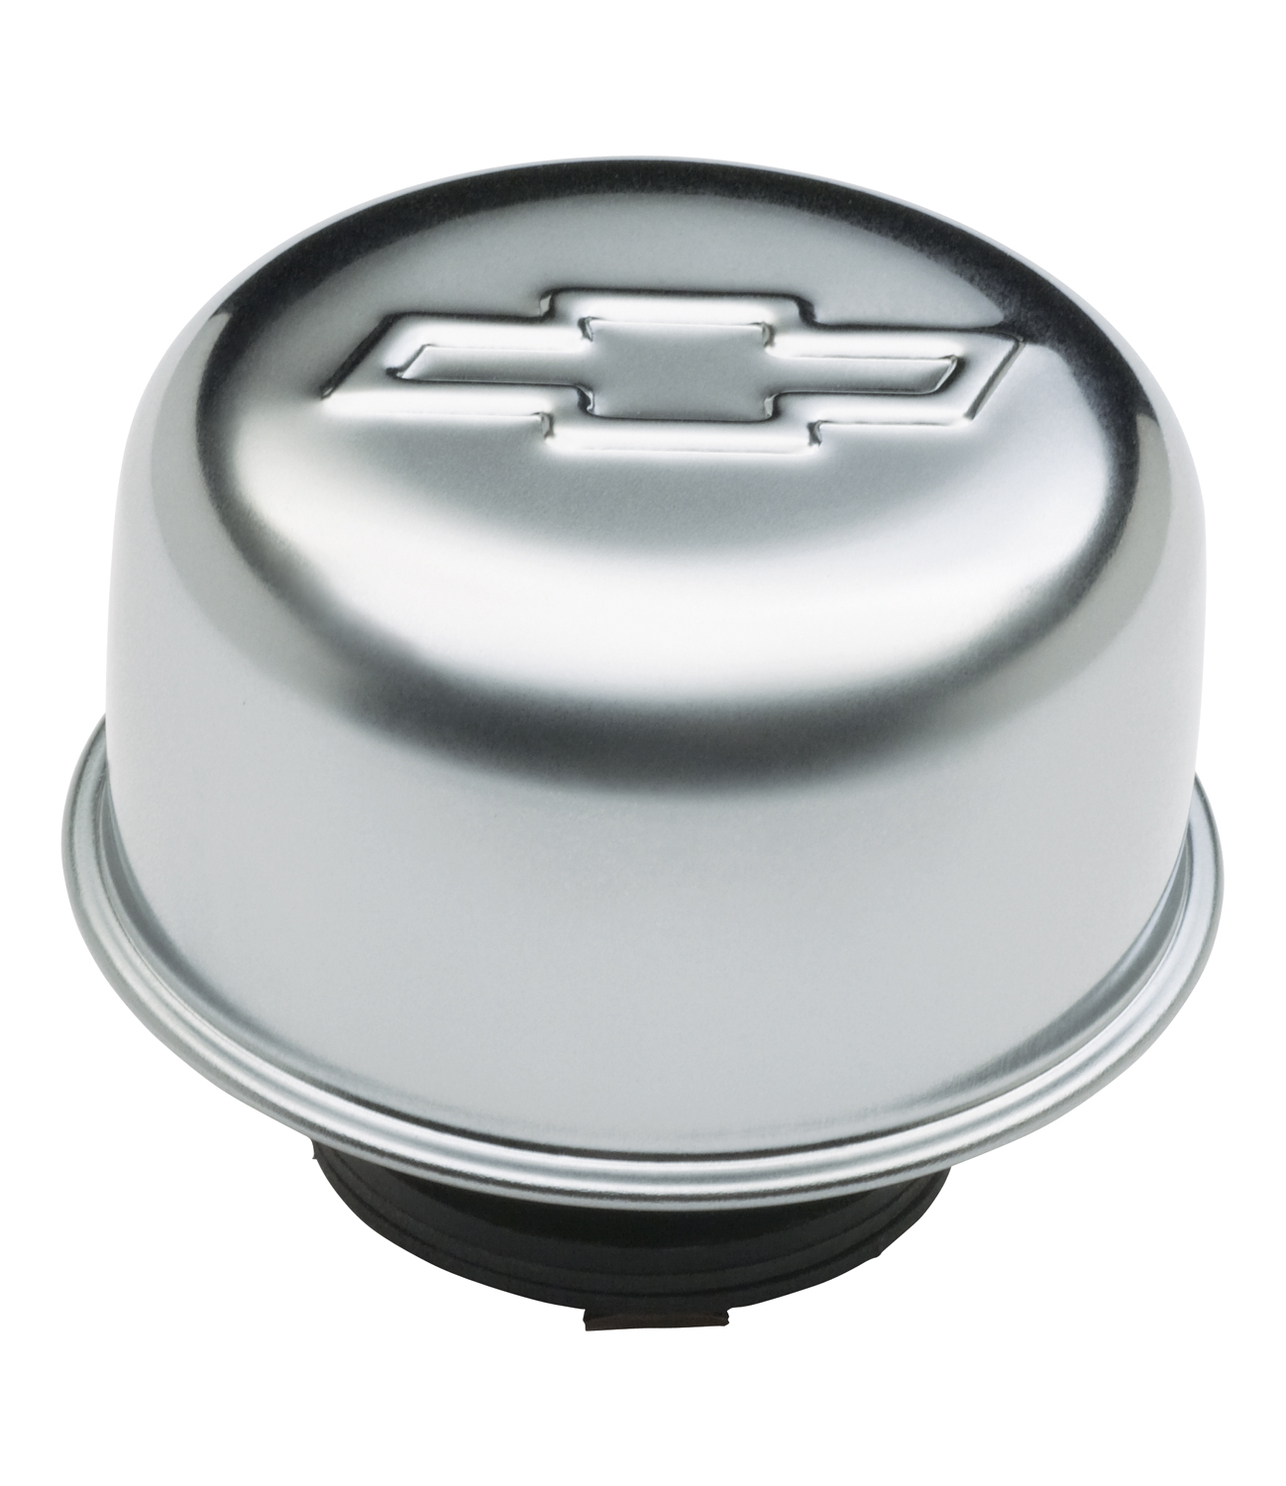 Proform Valve Cover Breather Cap Chrome Twist-On Type 3 Inch Diameter With Bowtie Logo Chevrolet Performance Parts